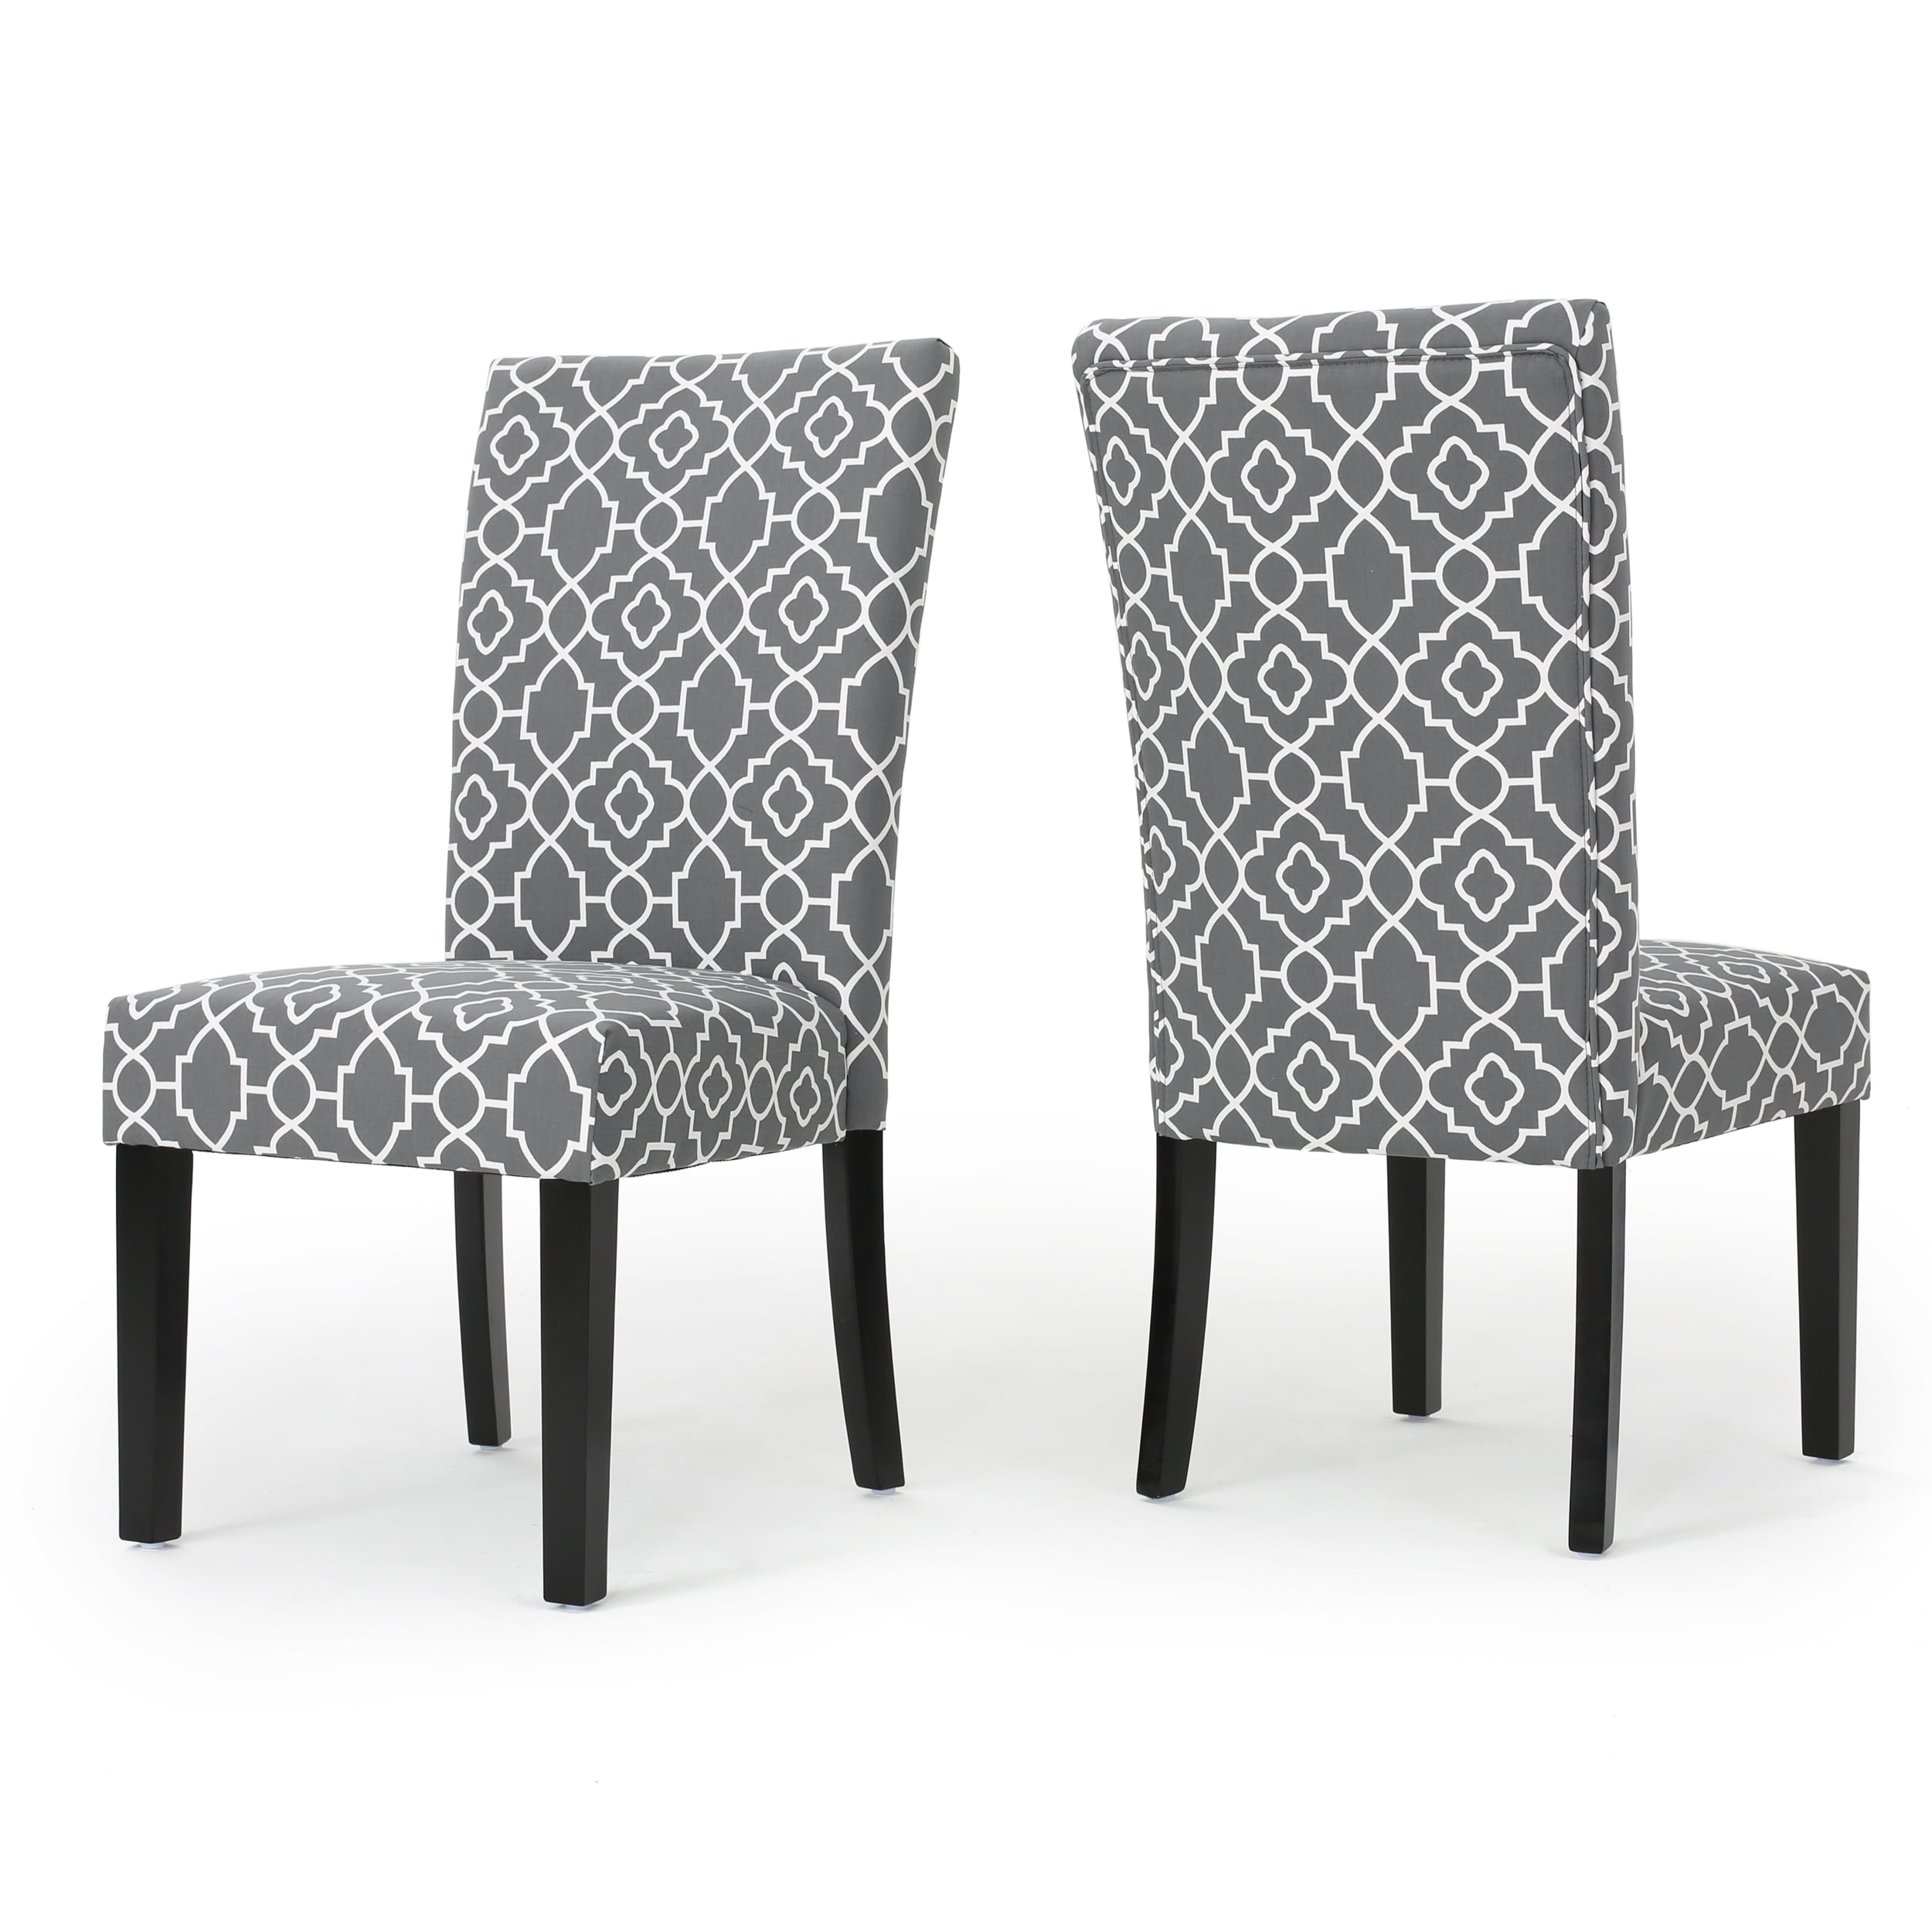 Jericho Fabric Dining Chair, Set of 2, Grey - Walmart.com - Walmart.com